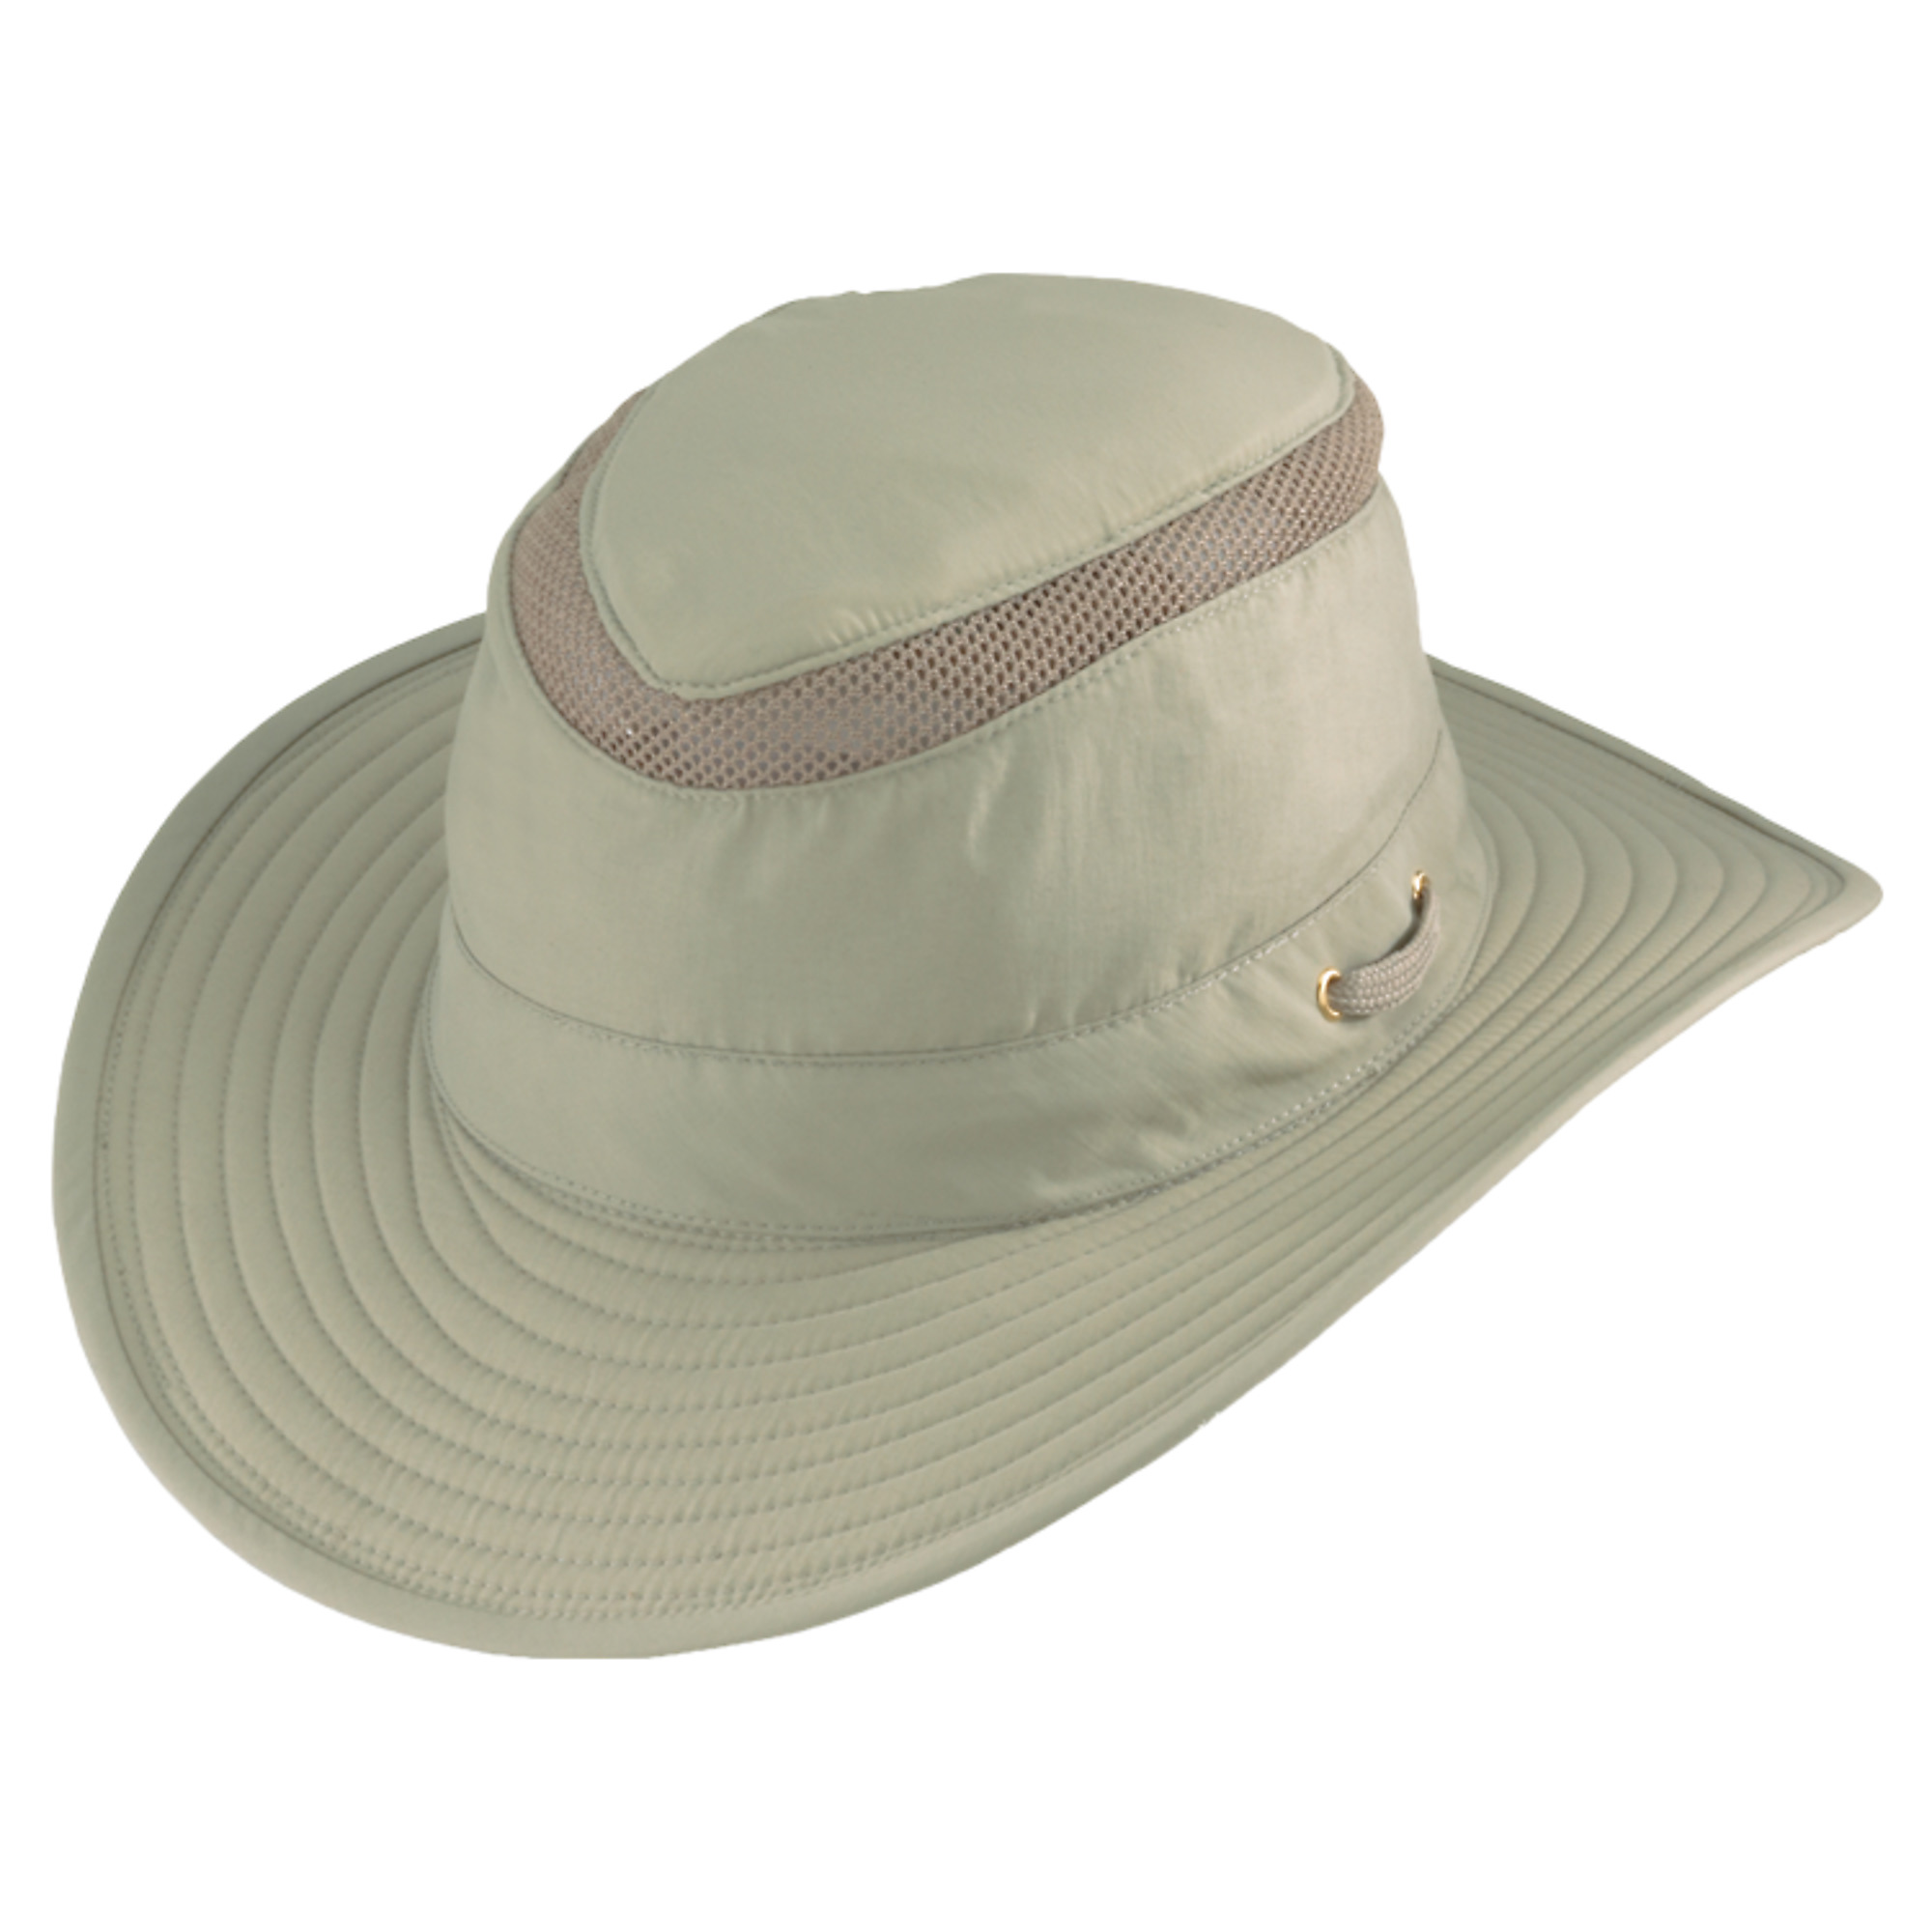 Henschel Hat Company, Camper Booney Hat, UPF 50+, Size XL, Color Tan, Hat Style Hat, Model 5552-13-XL